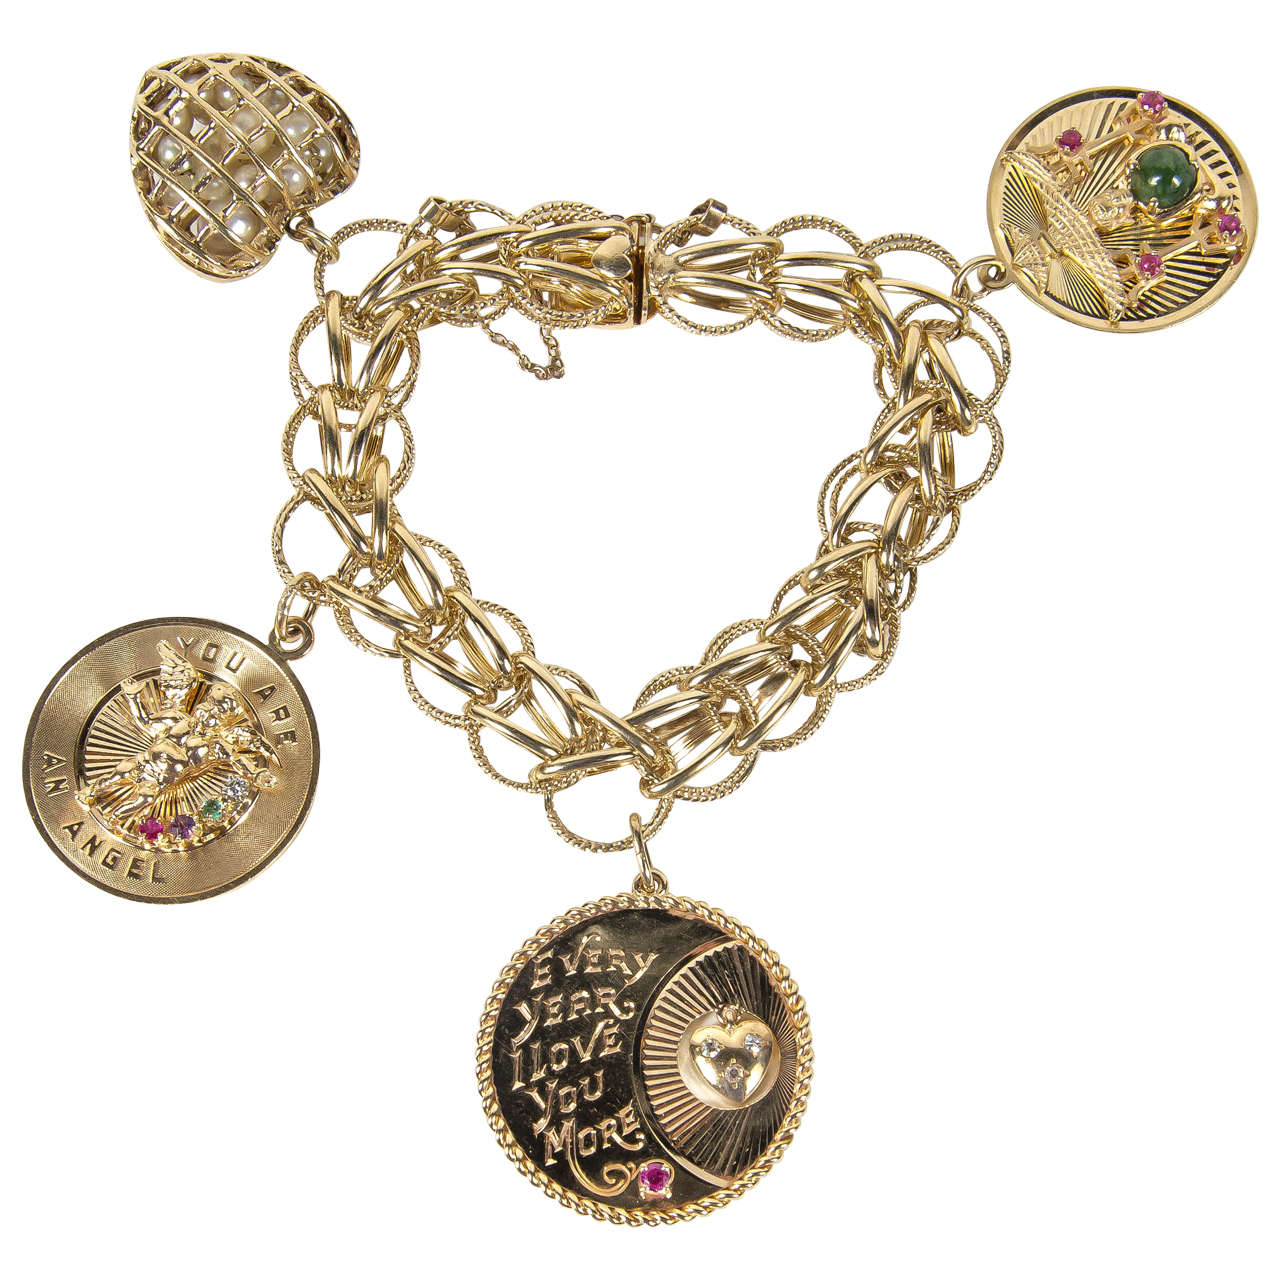 1950s Gold Multi Charm Bracelet With Cartier Charm